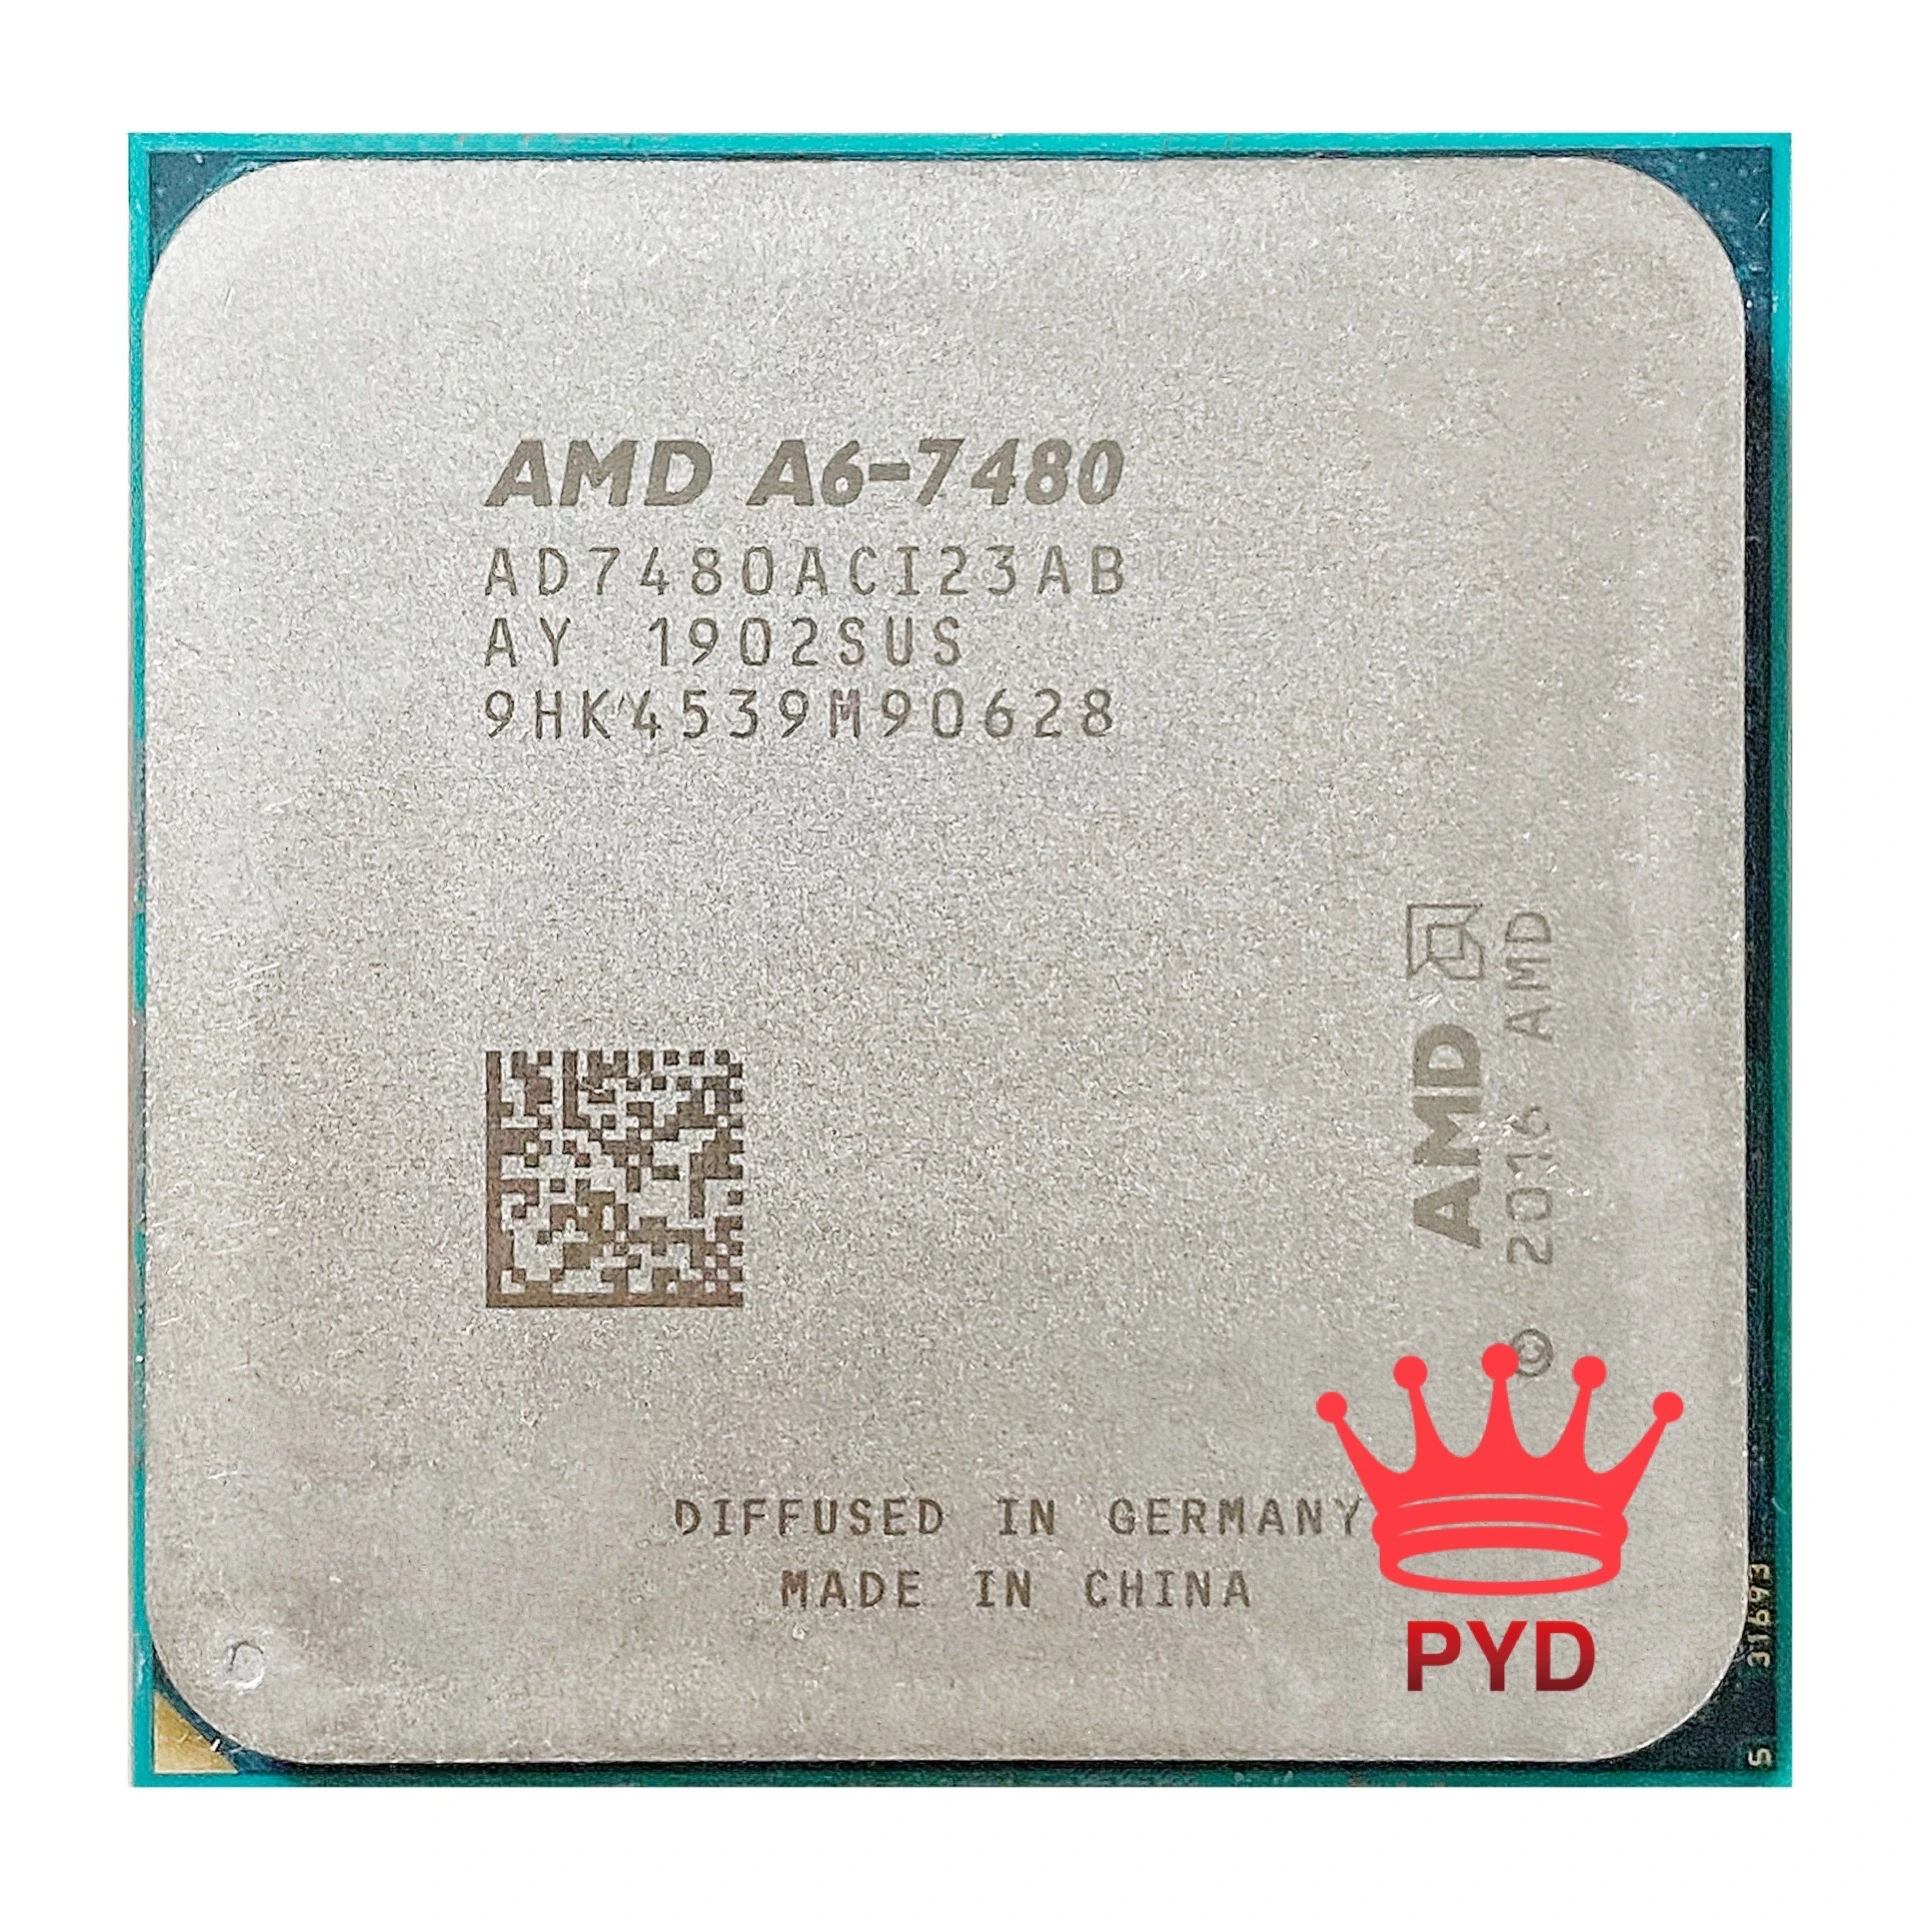 AMD A6-Series A6-7480 A6 7480 3.5 GHz Dual-Core Dual-Thread CPU Processor 65W L2=1M Socket FM2+ mobile processor list